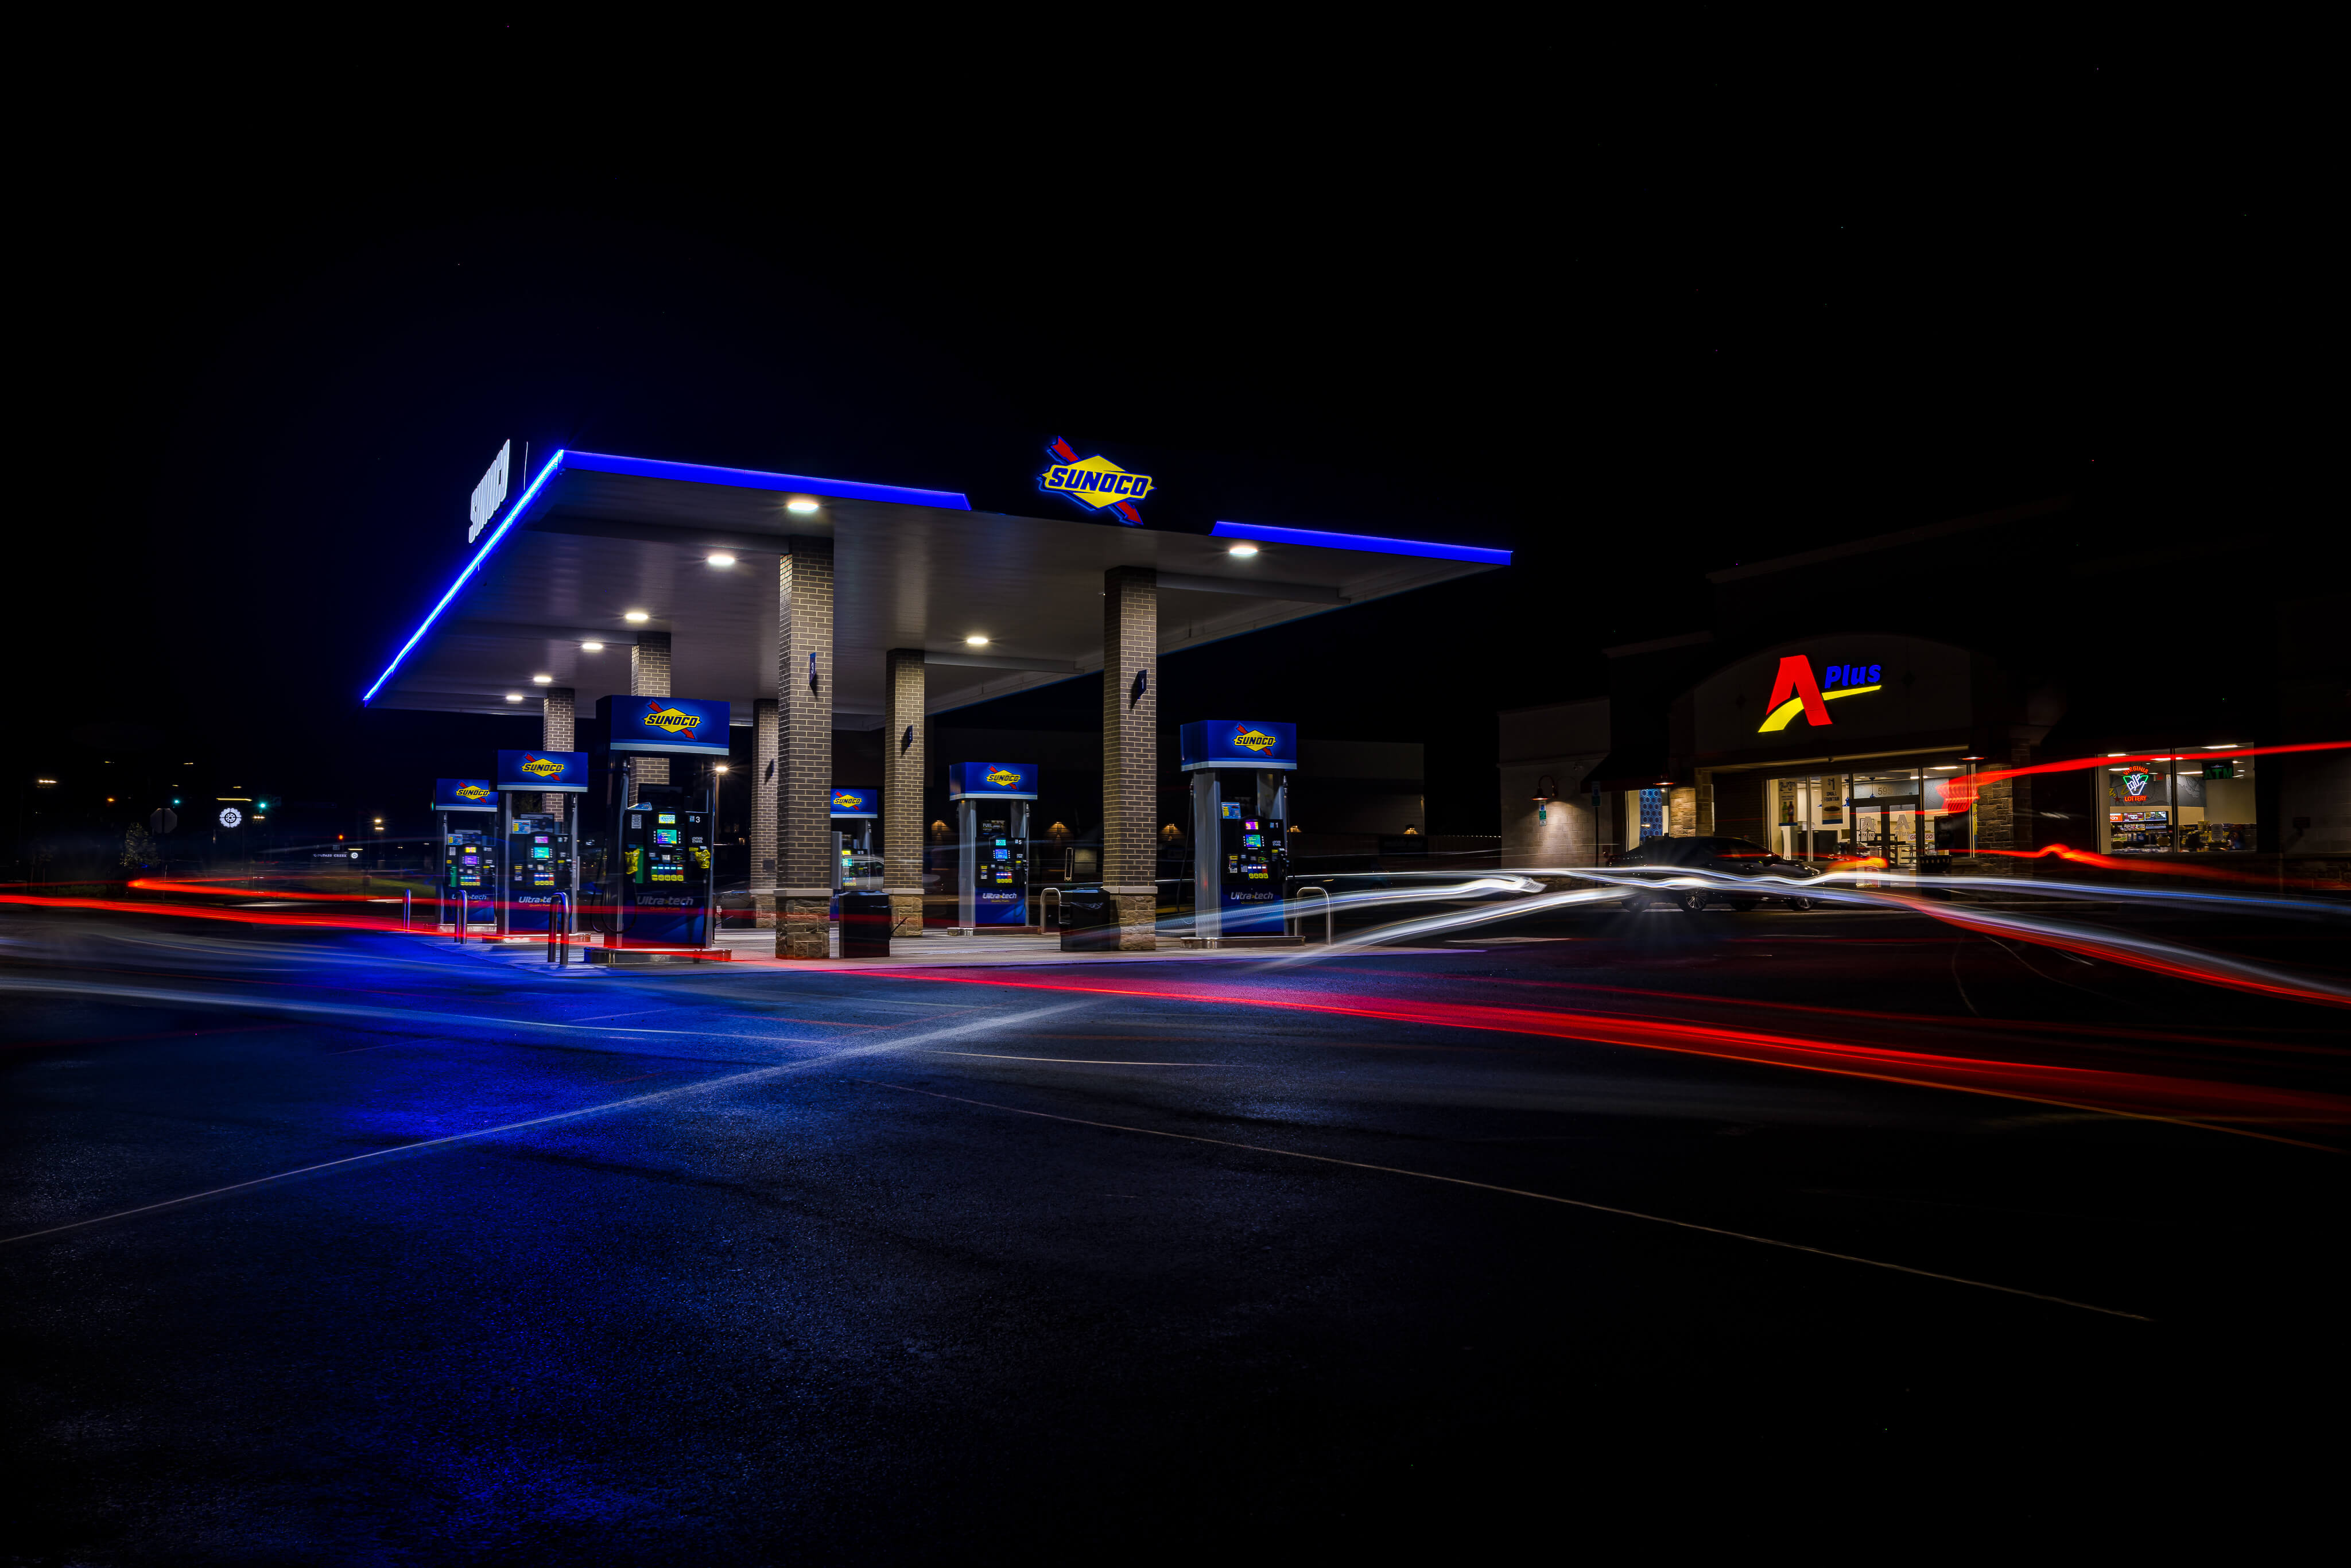 Sunoco Gas Station at night